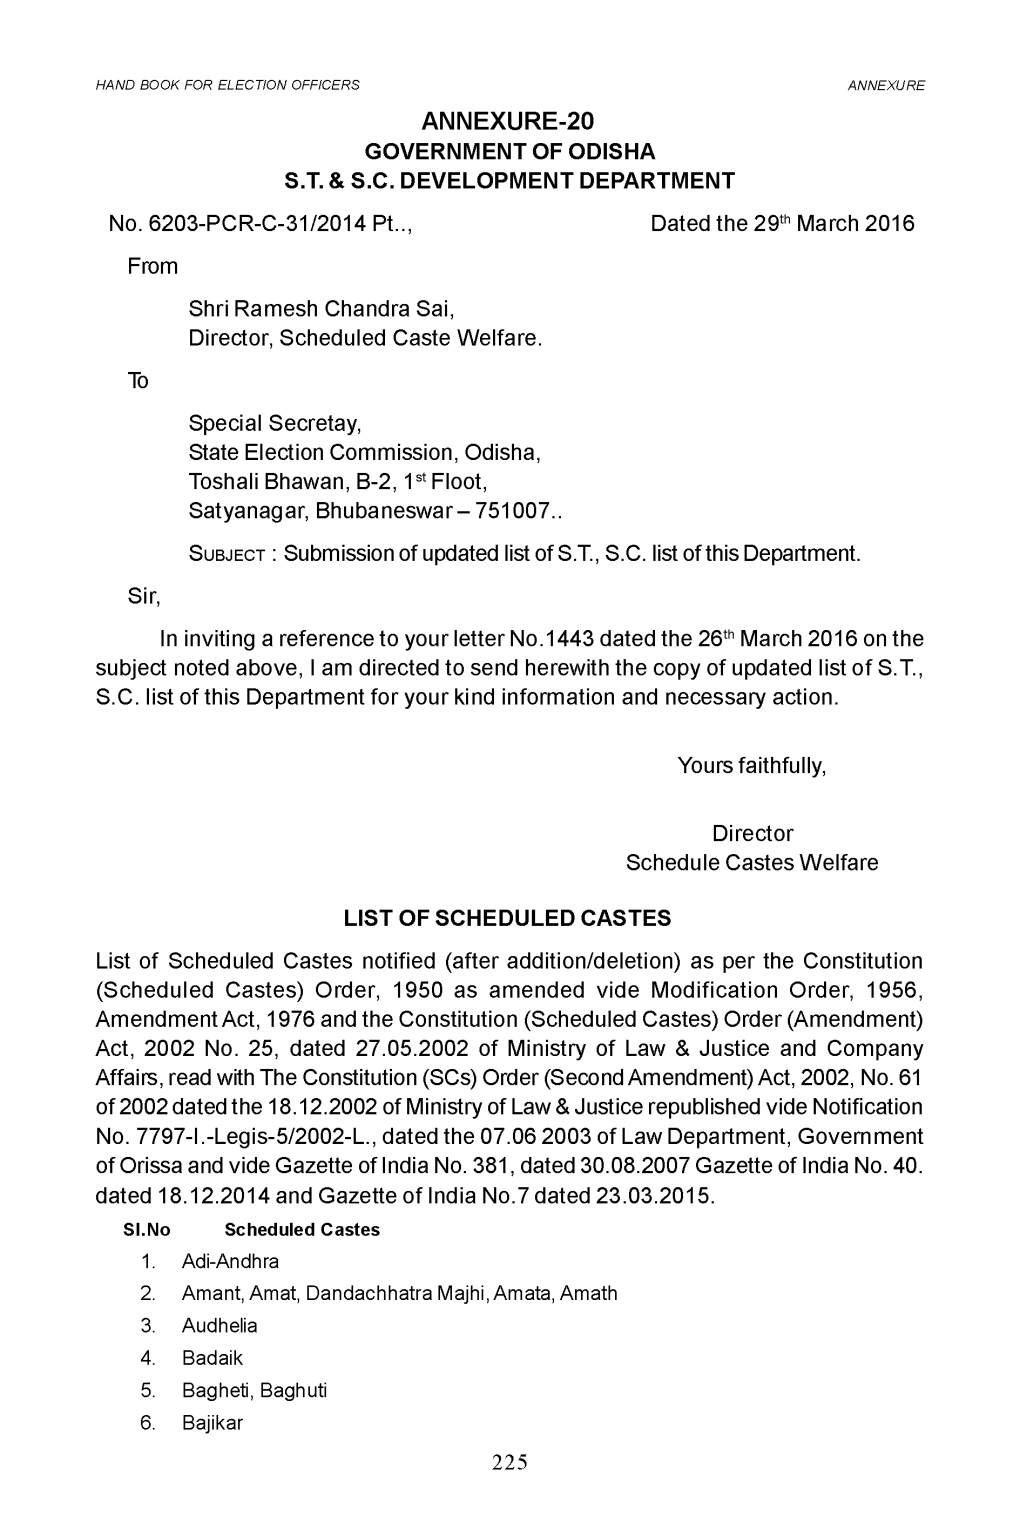 Annexure-20 Government of Odisha S.T